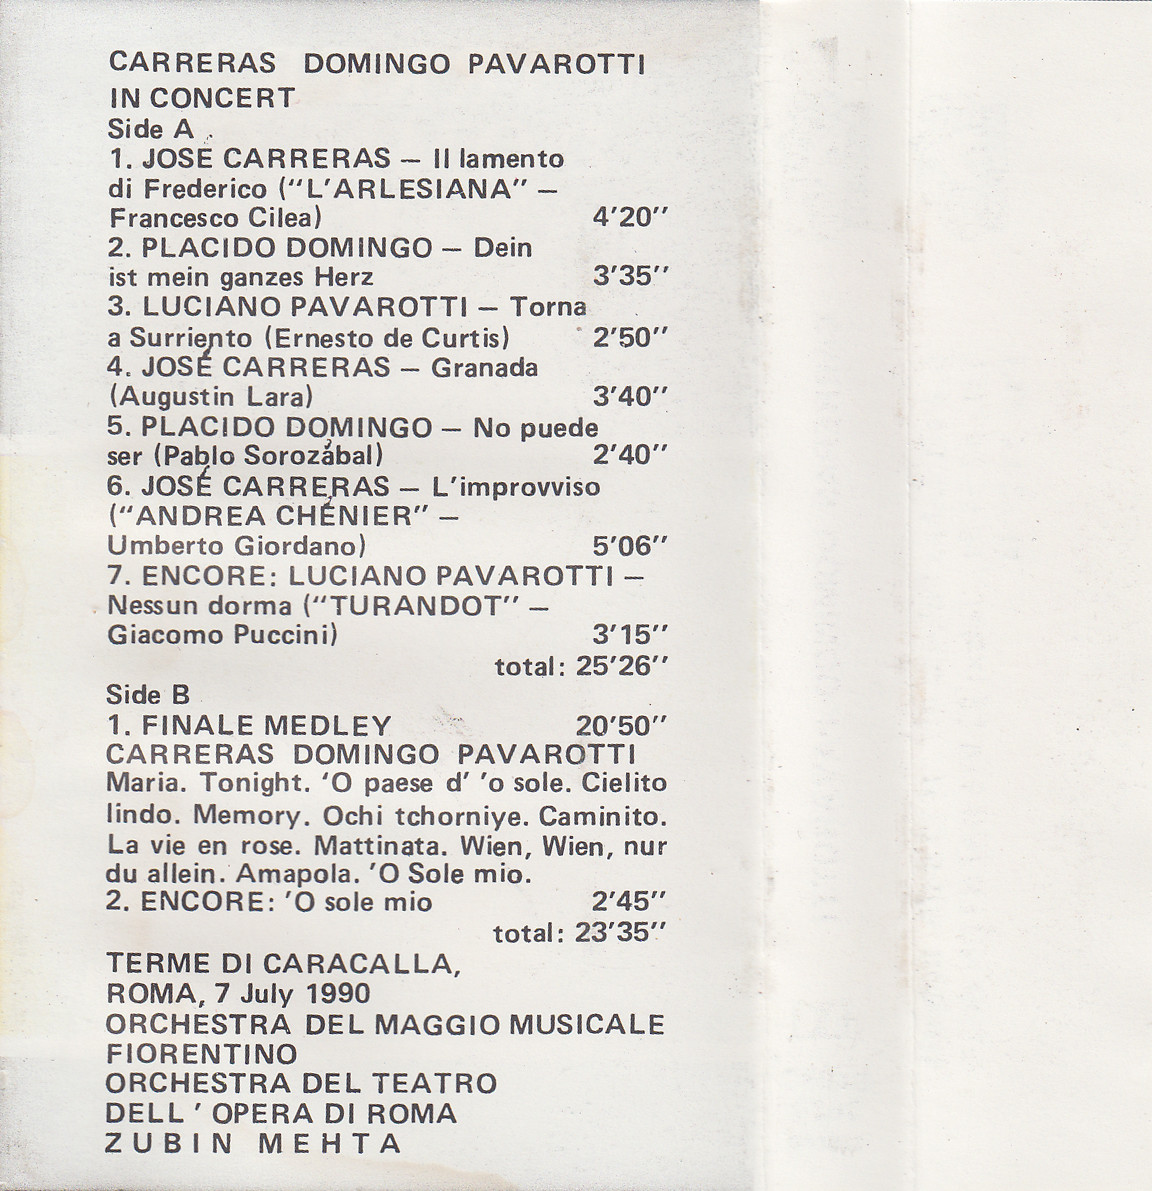 Carreras, Domingo, Pavaroti in concert